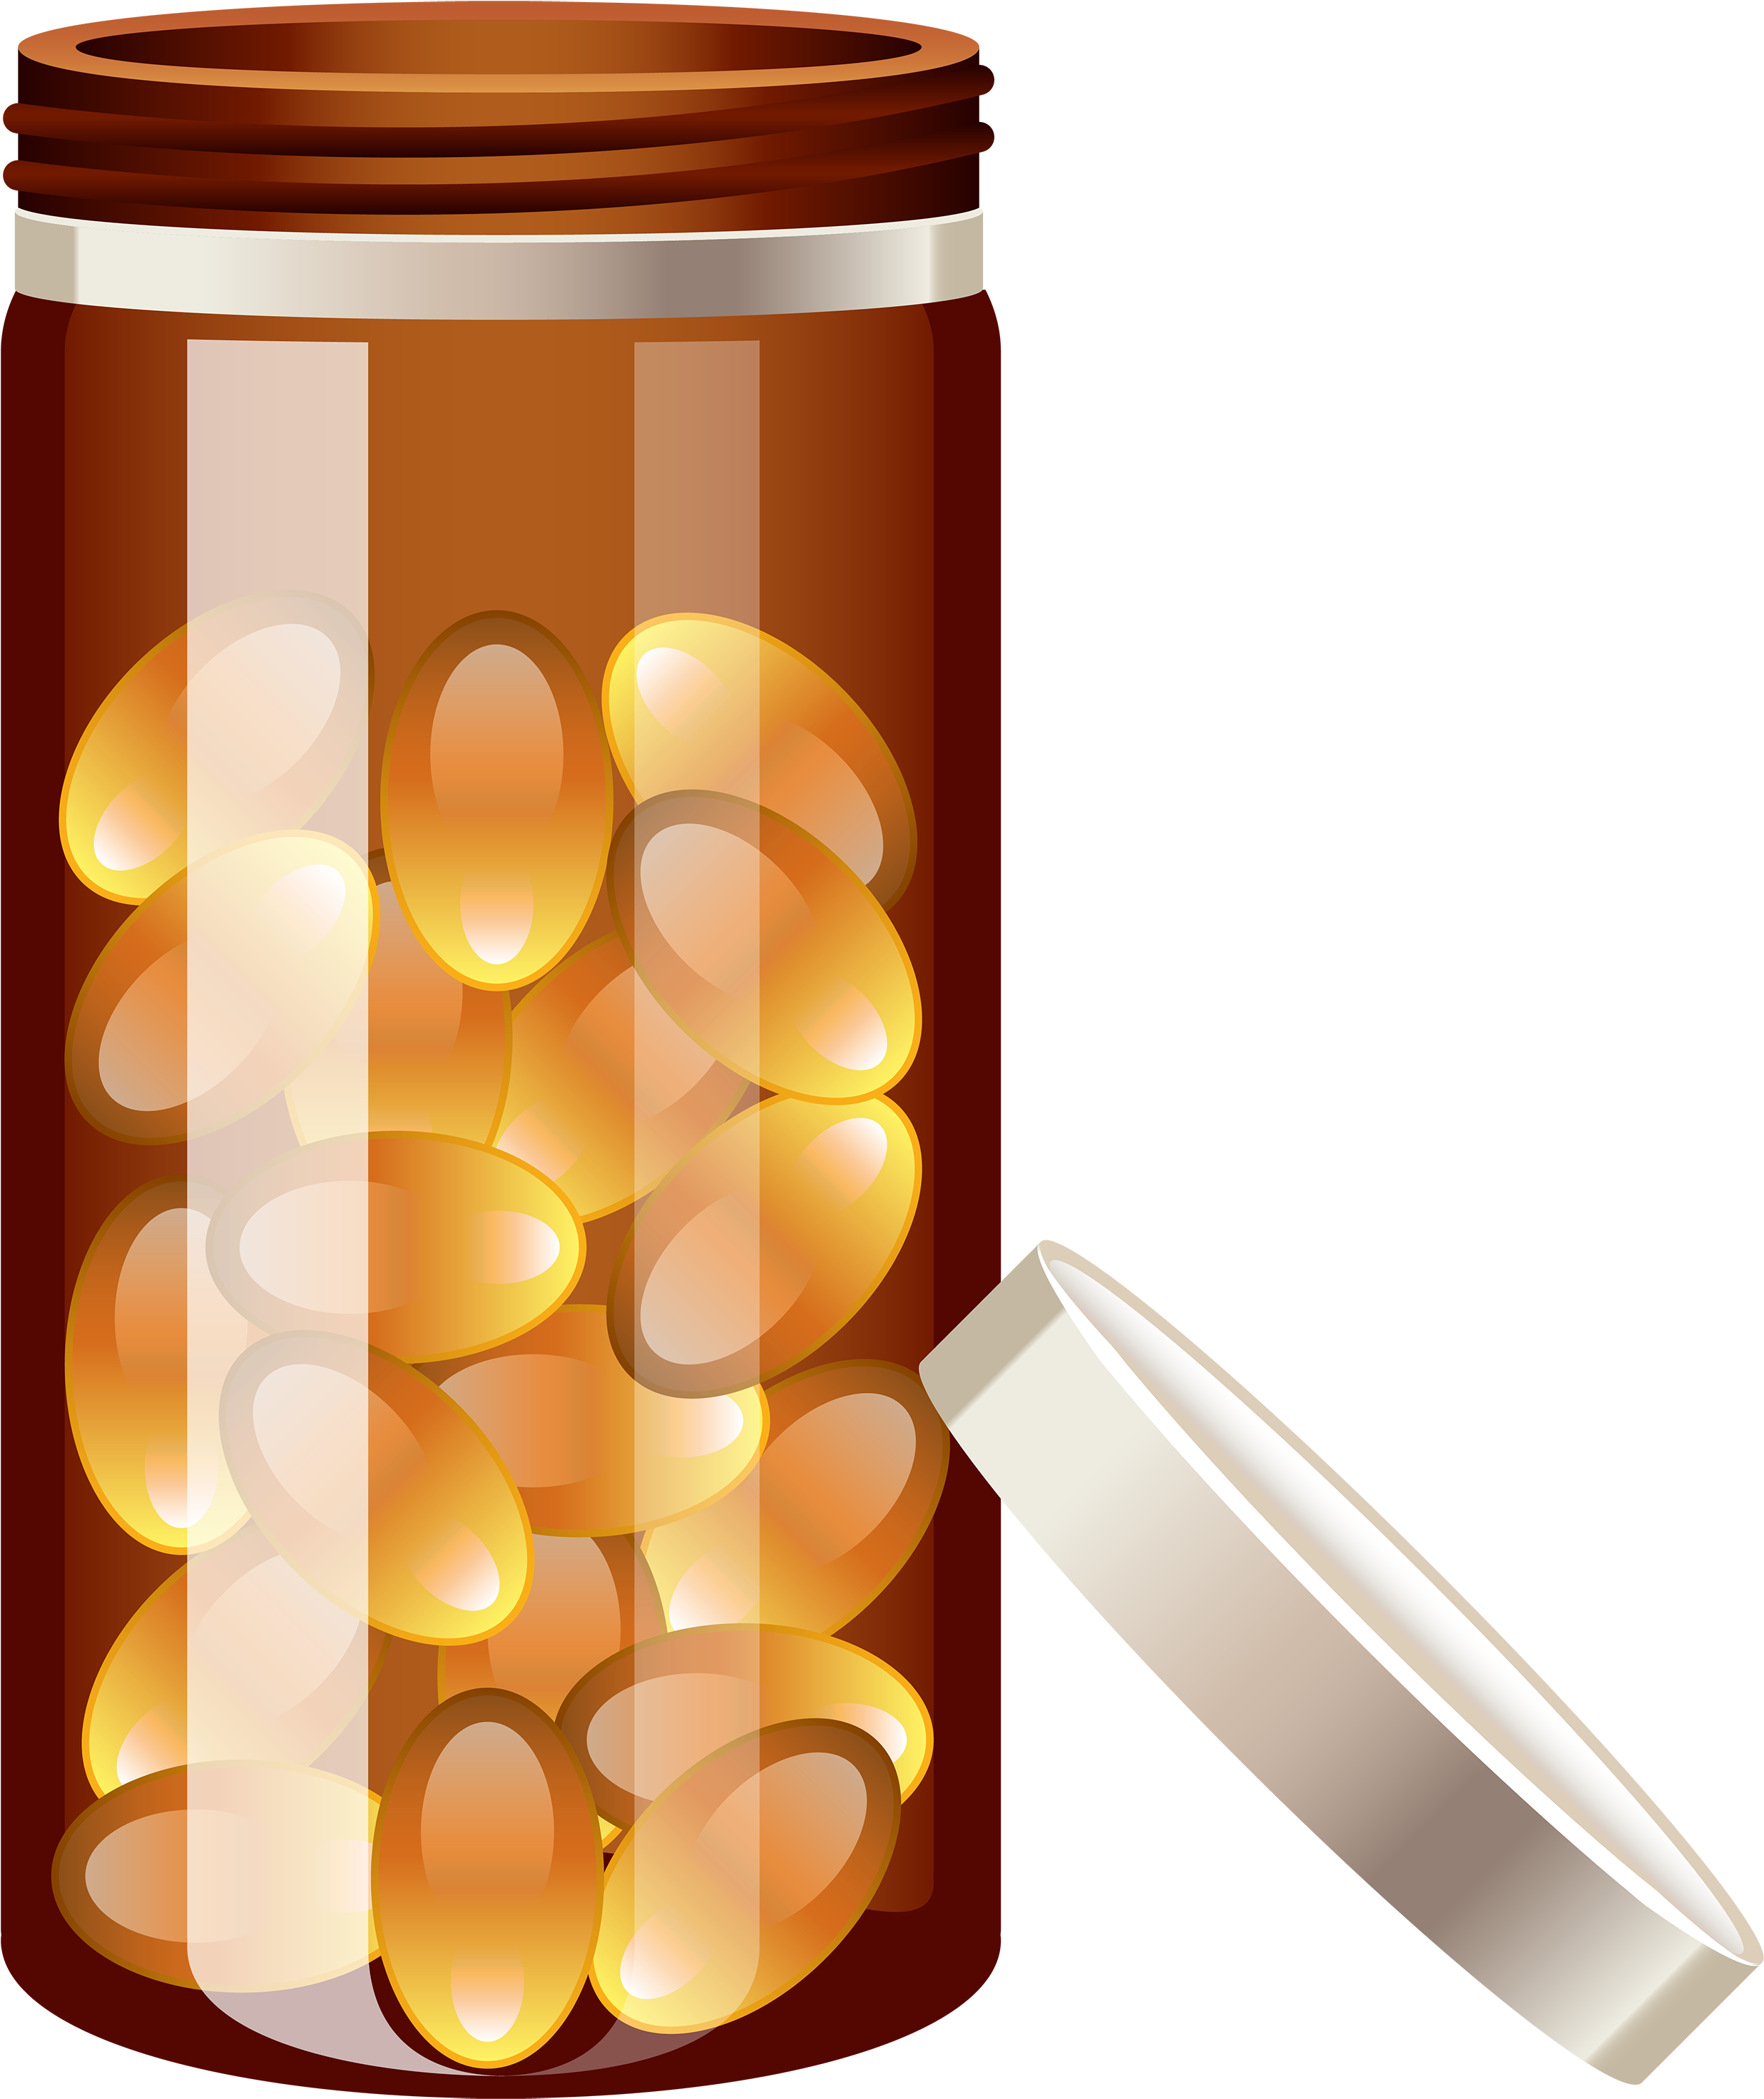 Medication Pills Bottle Vector